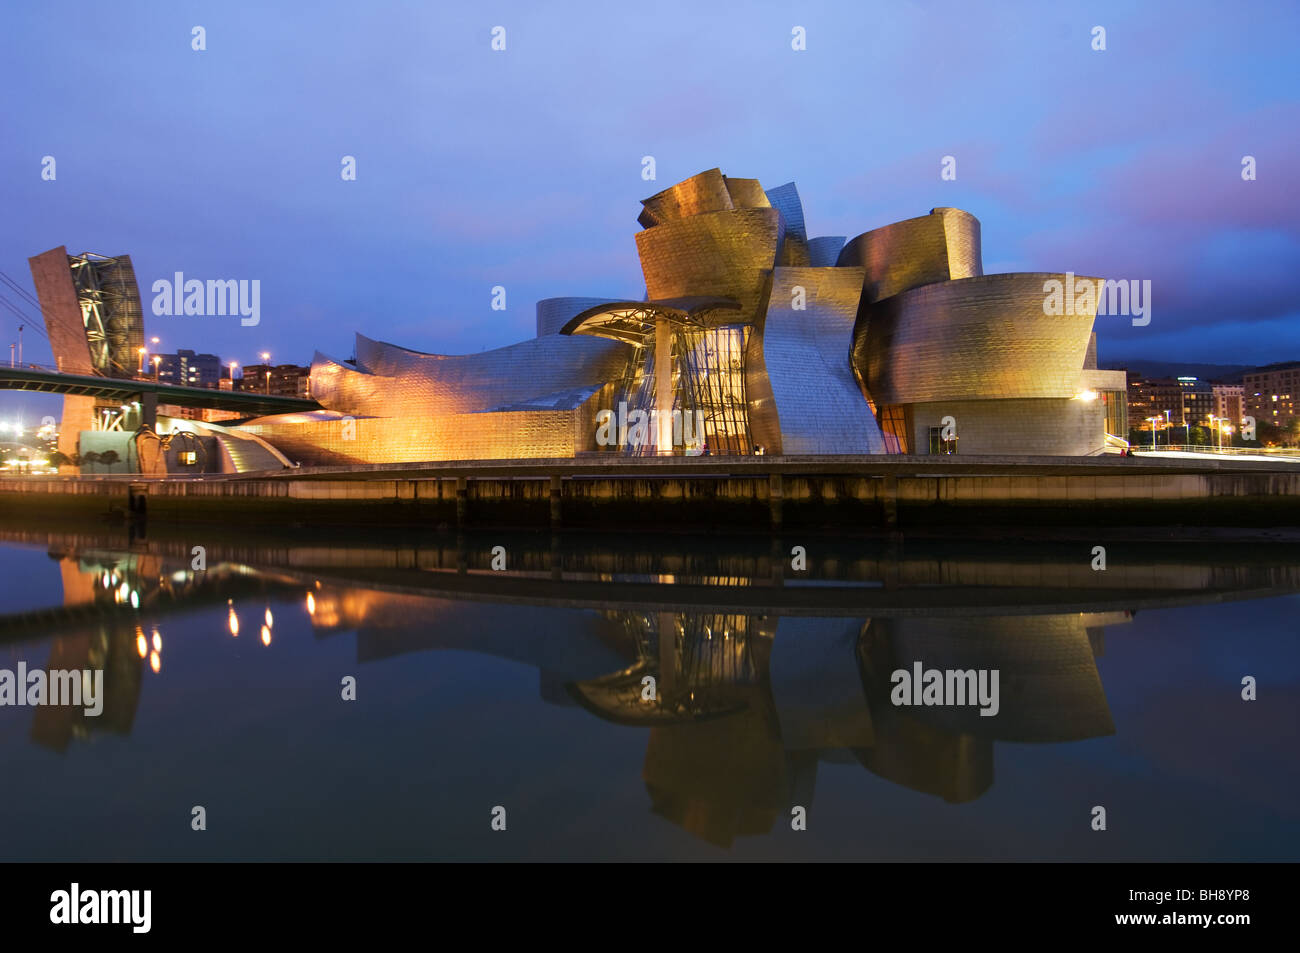 The Guggenheim Museum of modern art, by architect Frank Gehry, Bilbao, Pais Vasco, Spain Stock Photo